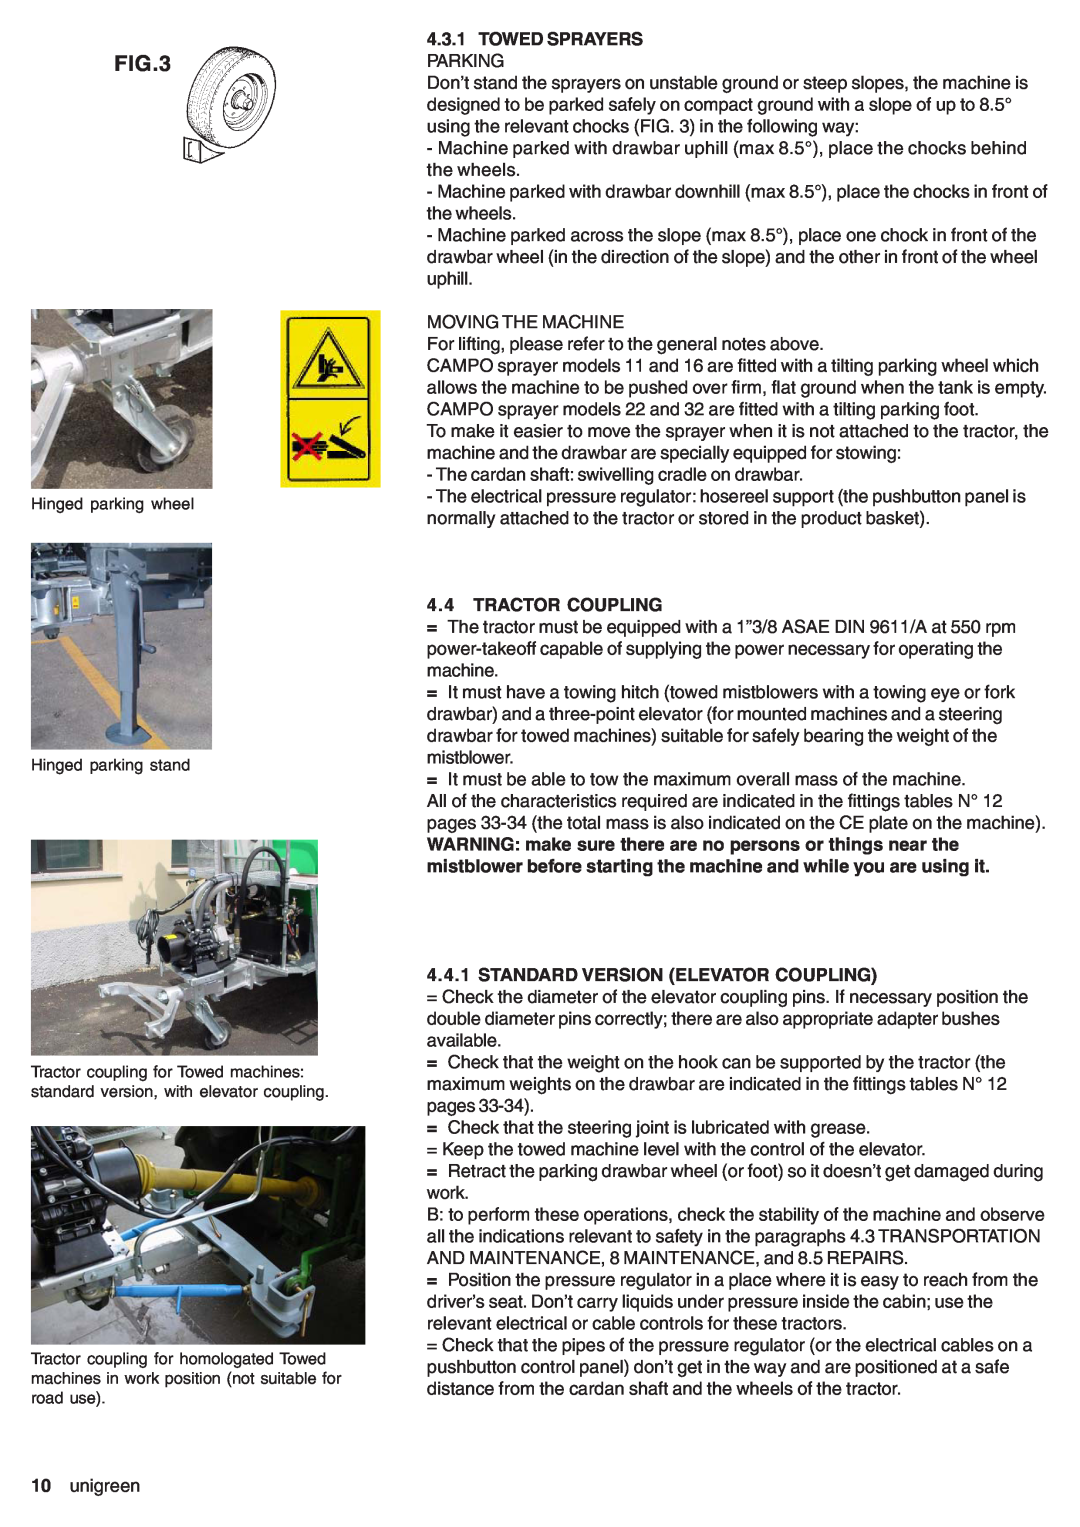 Unigreen DSP 11 - 16 - 22 - 32 manual Towed Sprayers Parking, Tractor Coupling, Standard Version Elevator Coupling 